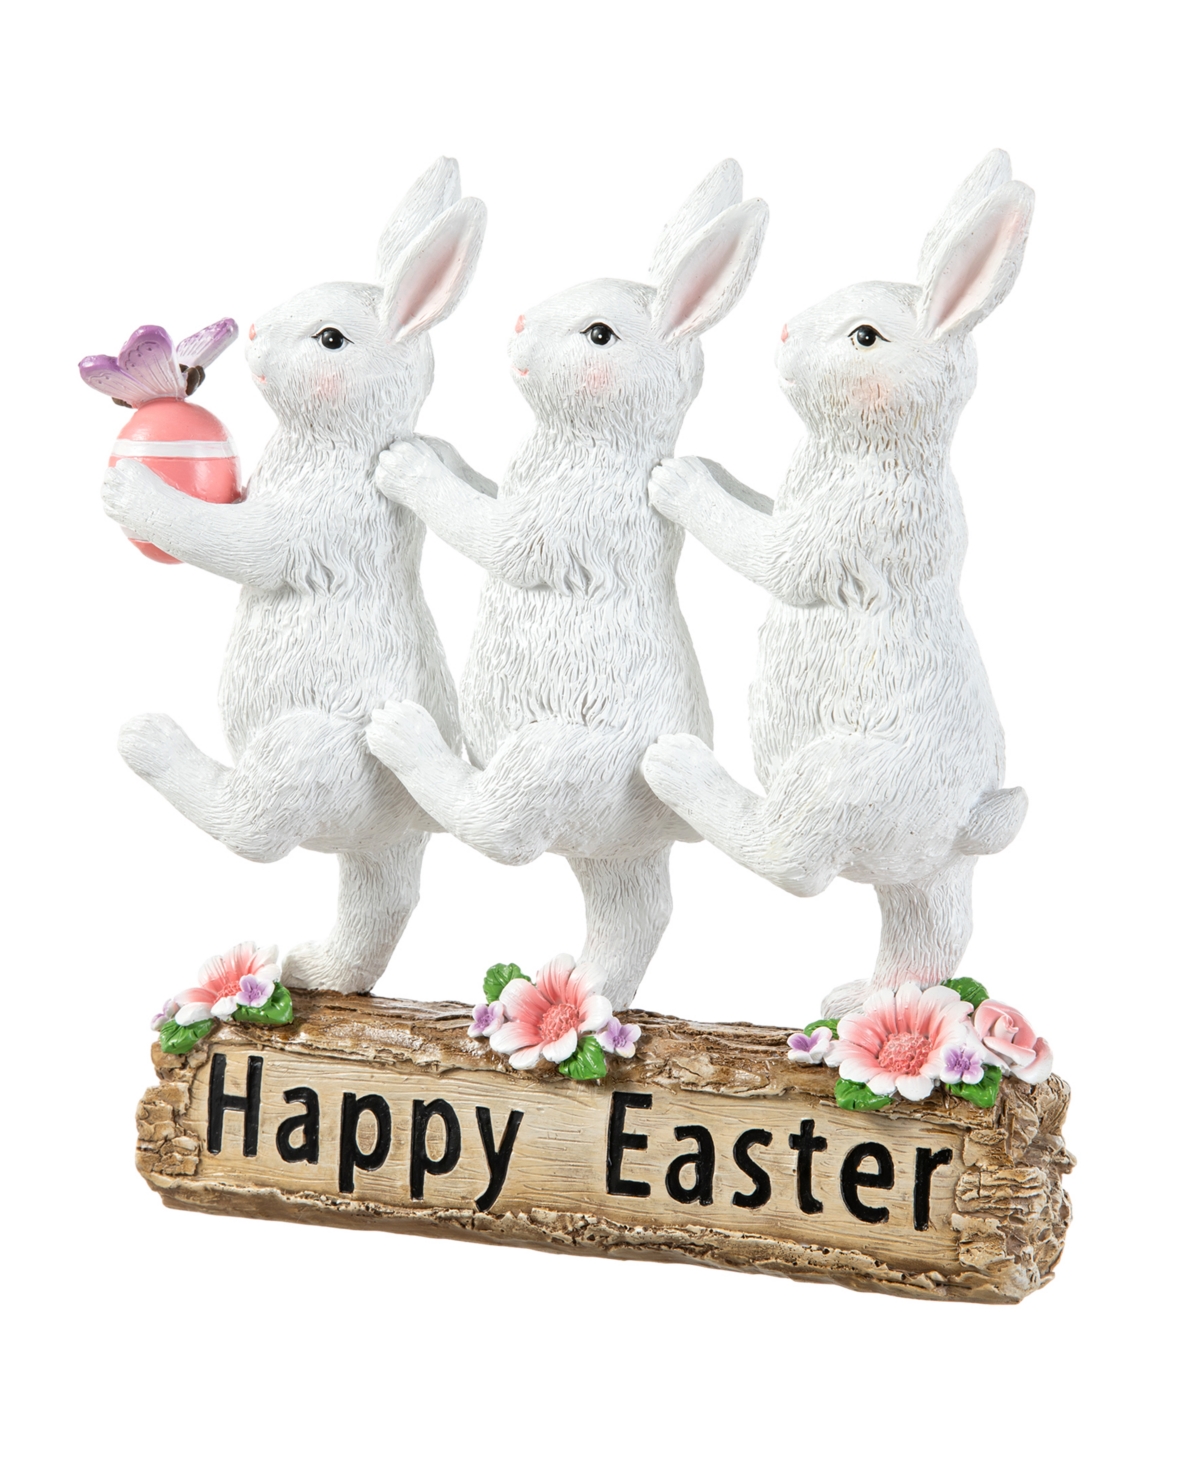 9.25" H Easter Resin Triple Bunny Table Decor - Multi